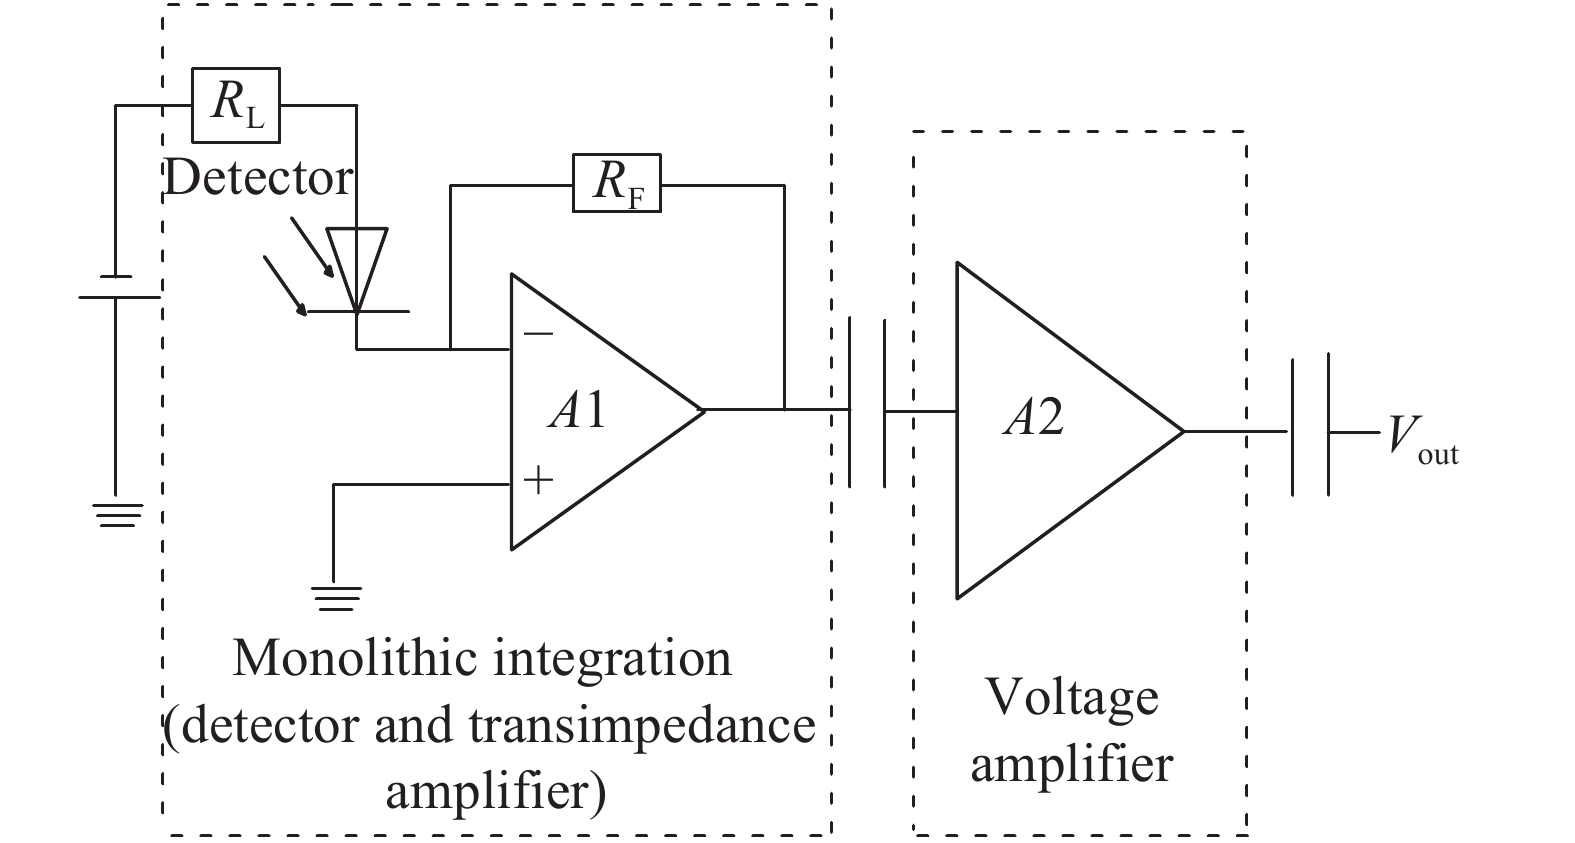 Structure diagram of amplifier circuit